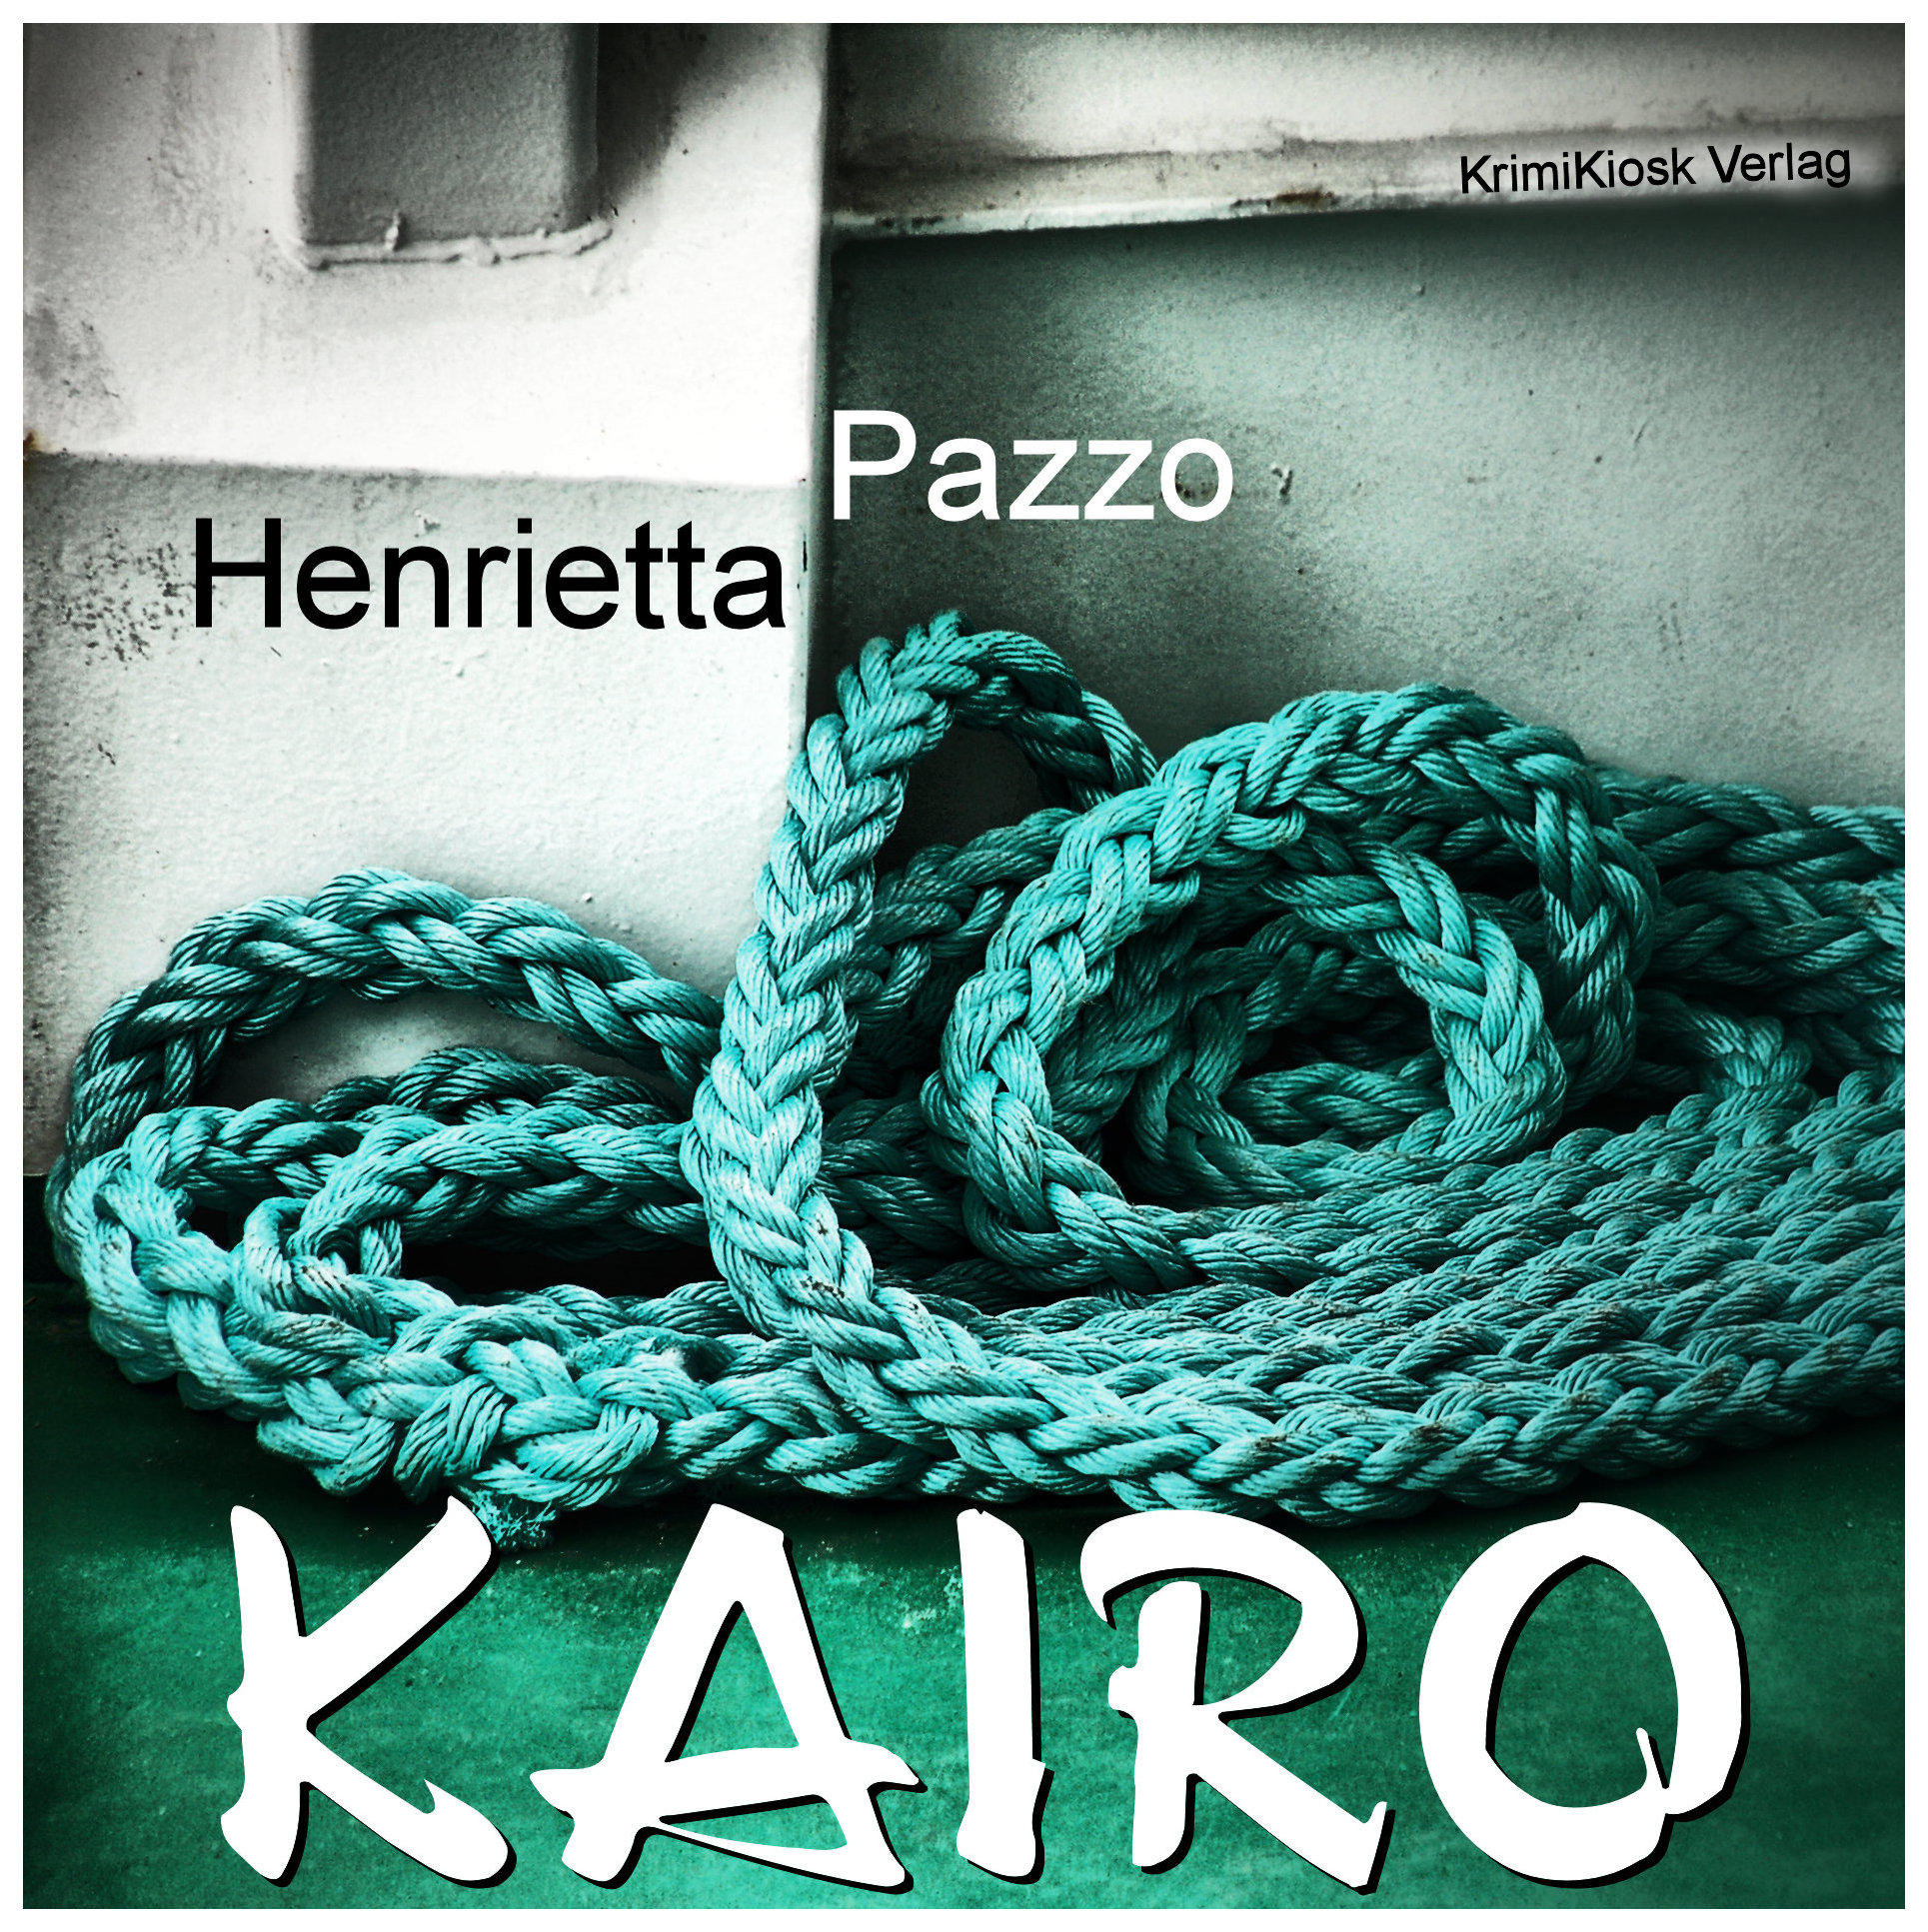 KAIRO  Episode 07 Kriminalroman von Henrietta Pazzo